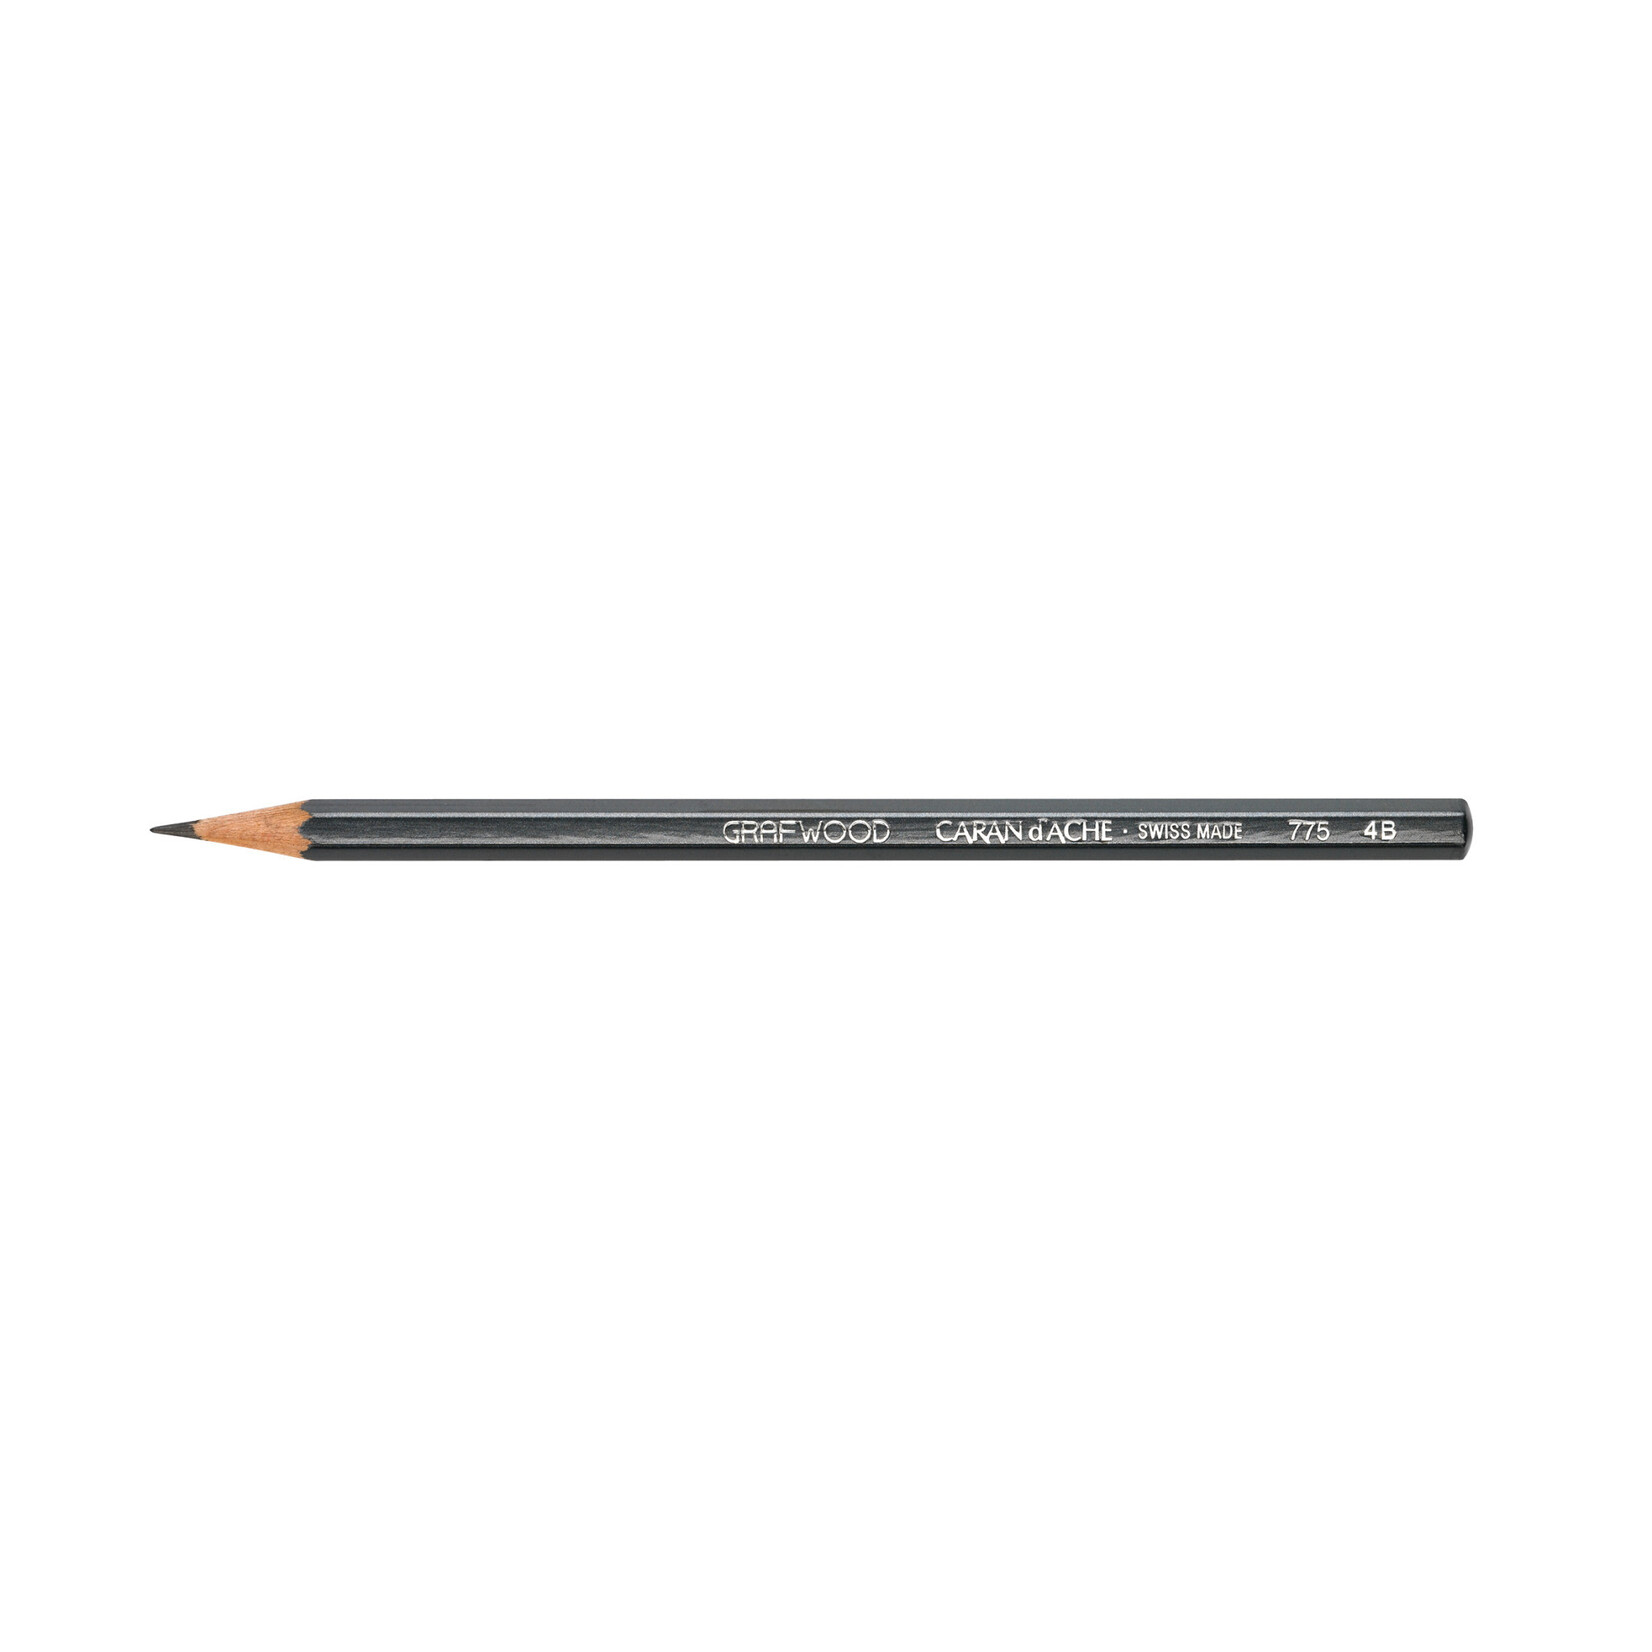 Graphite Line Artist Graphite Pencil Grafwood 4B